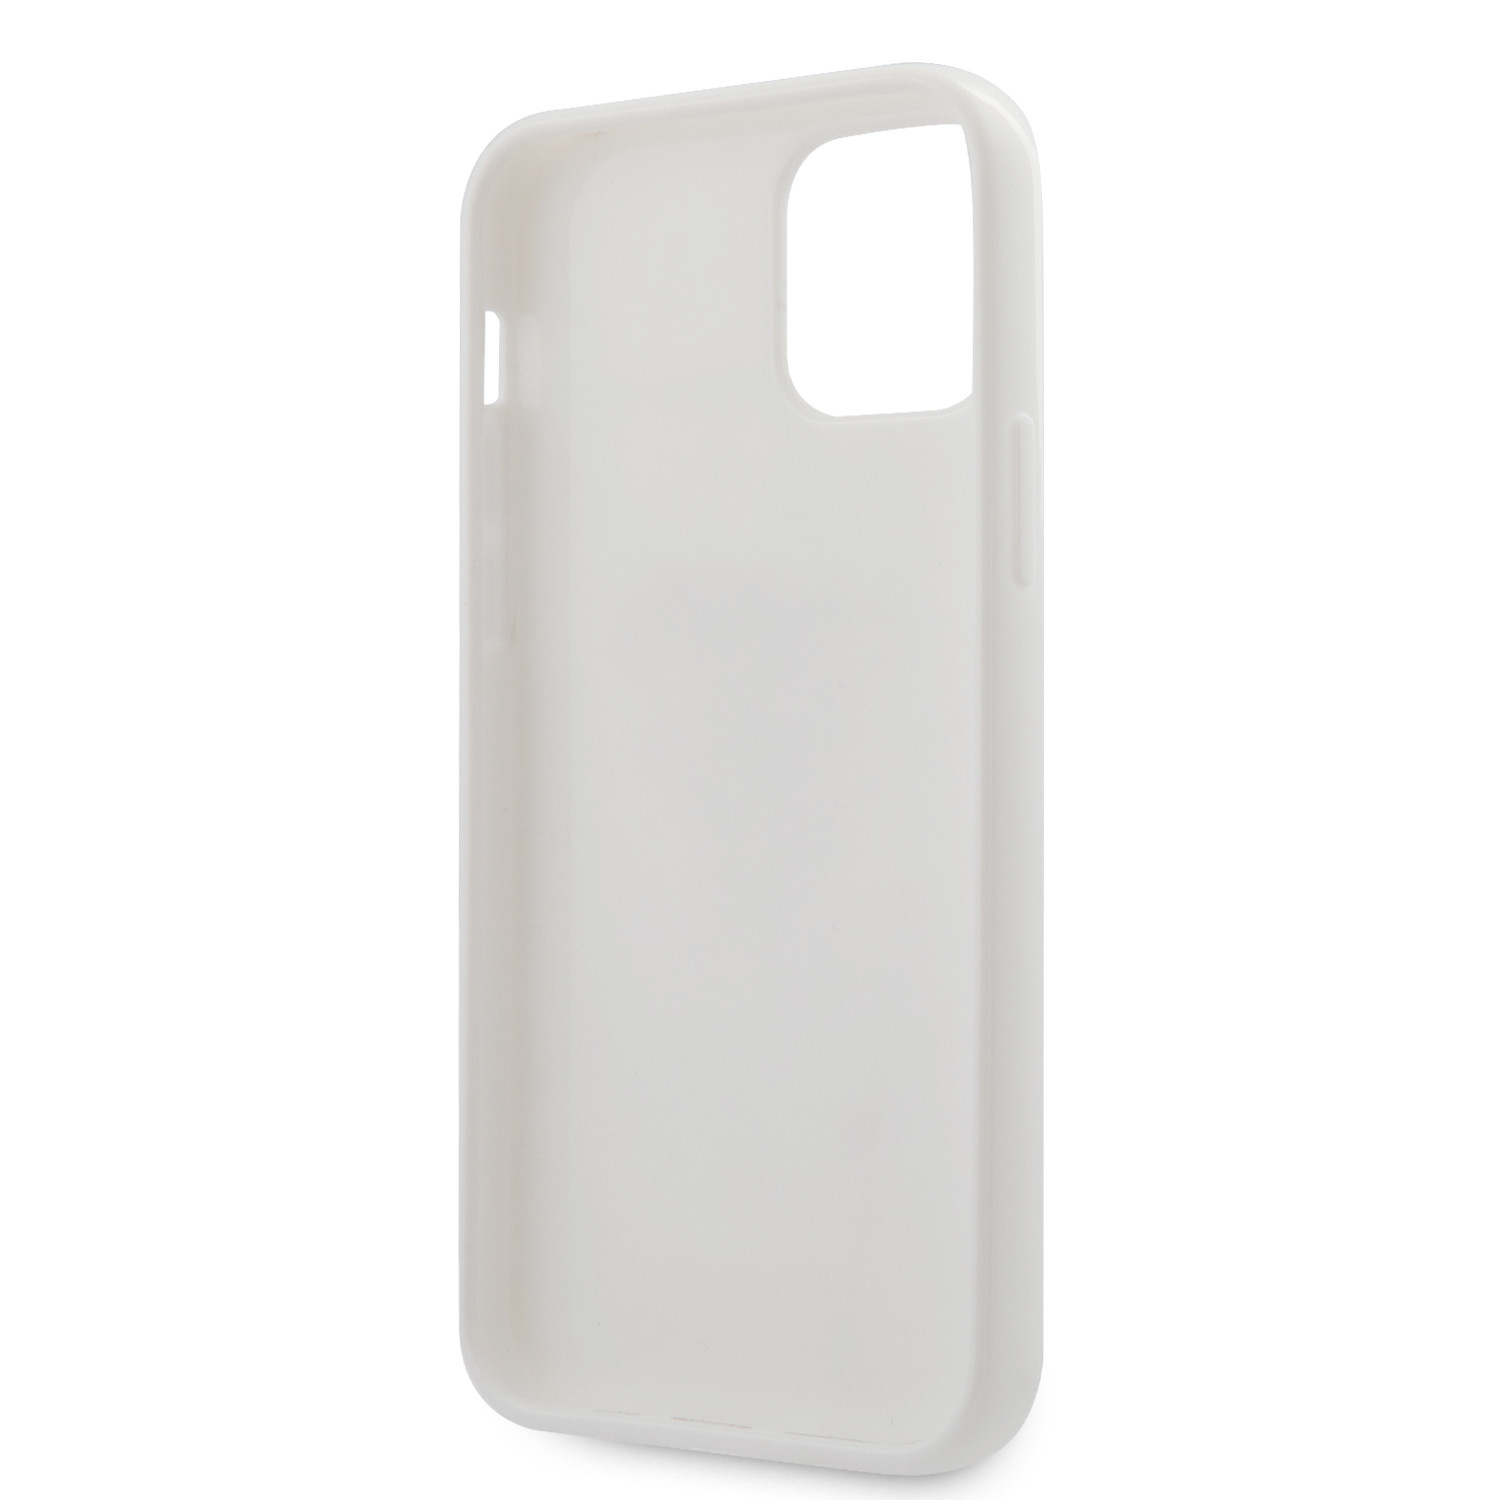 Husa Cover Guess Marble pentru iPhone 12/12 Pro White thumb